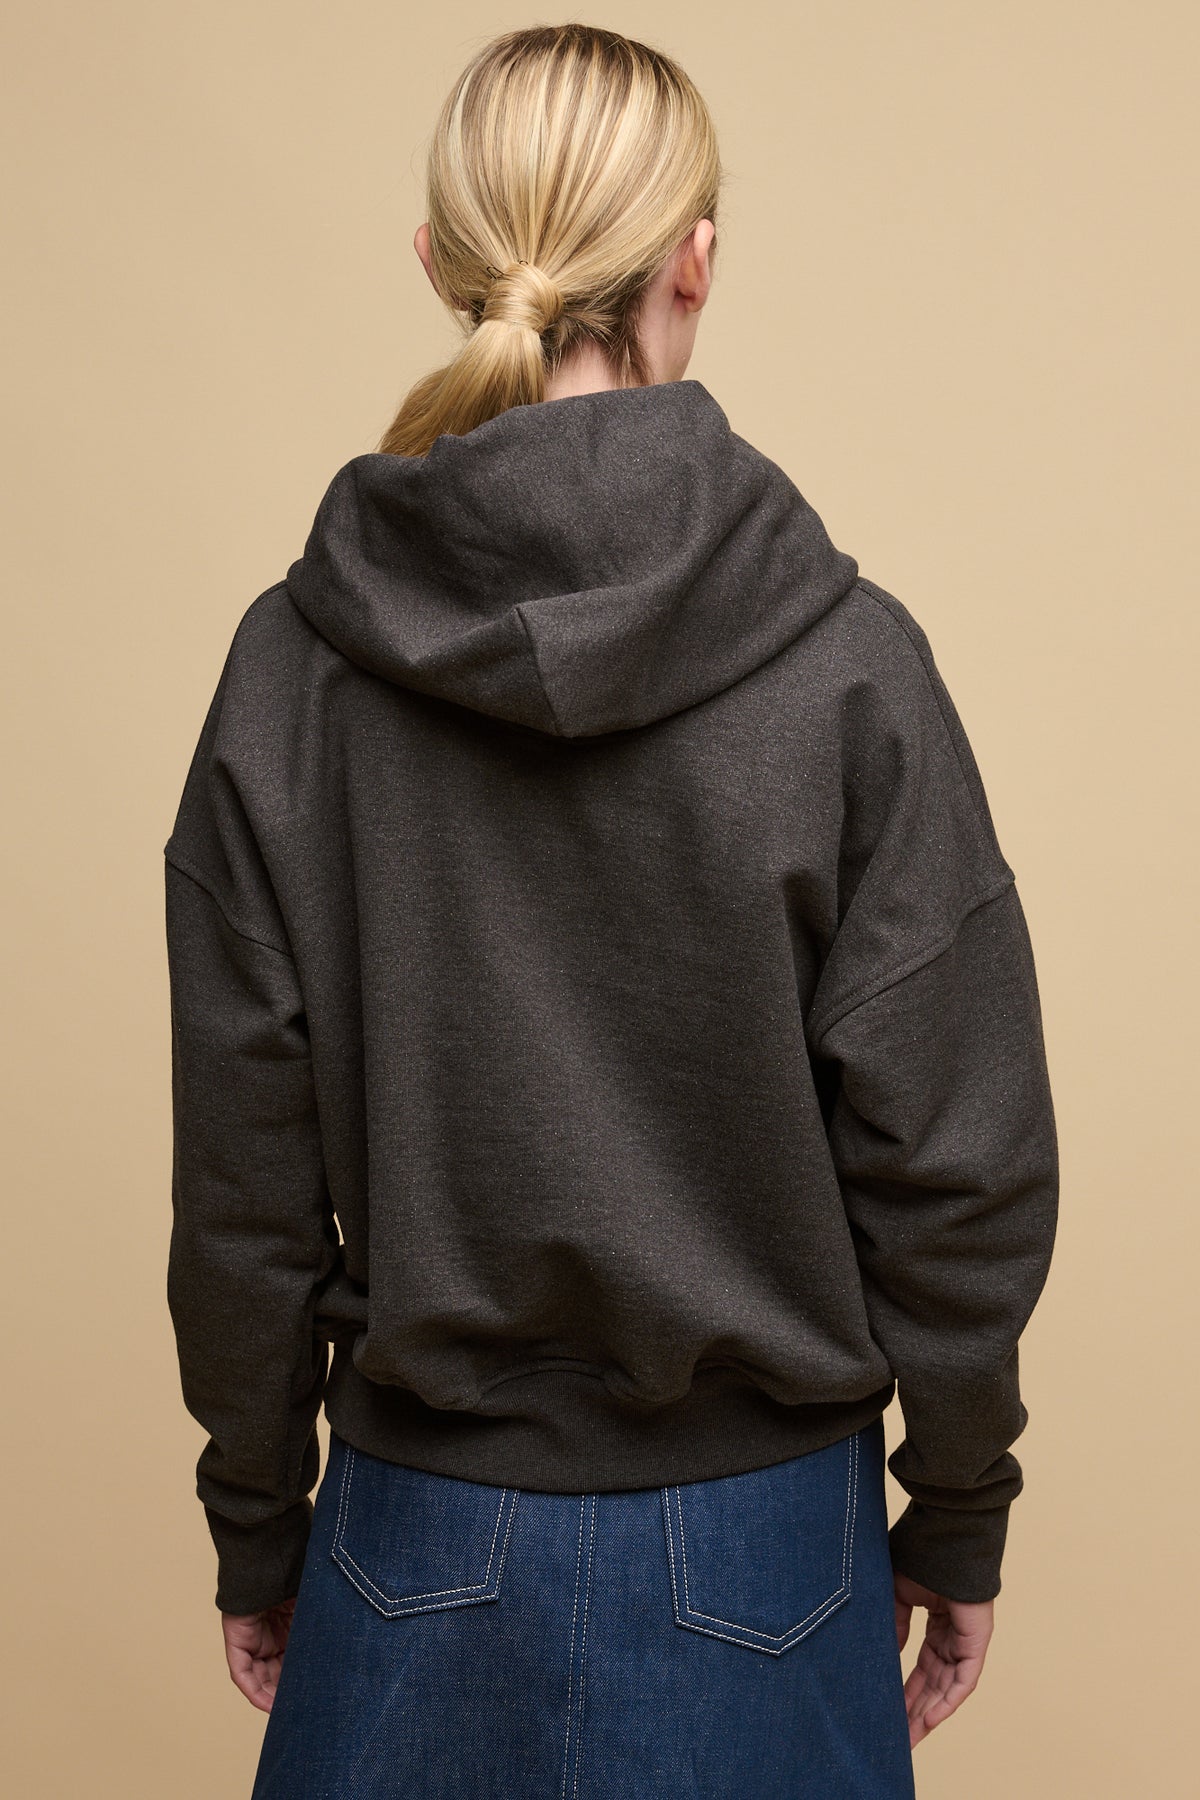 
            The back of blonde female wearing heritage hooded sweatshirt in charcoal